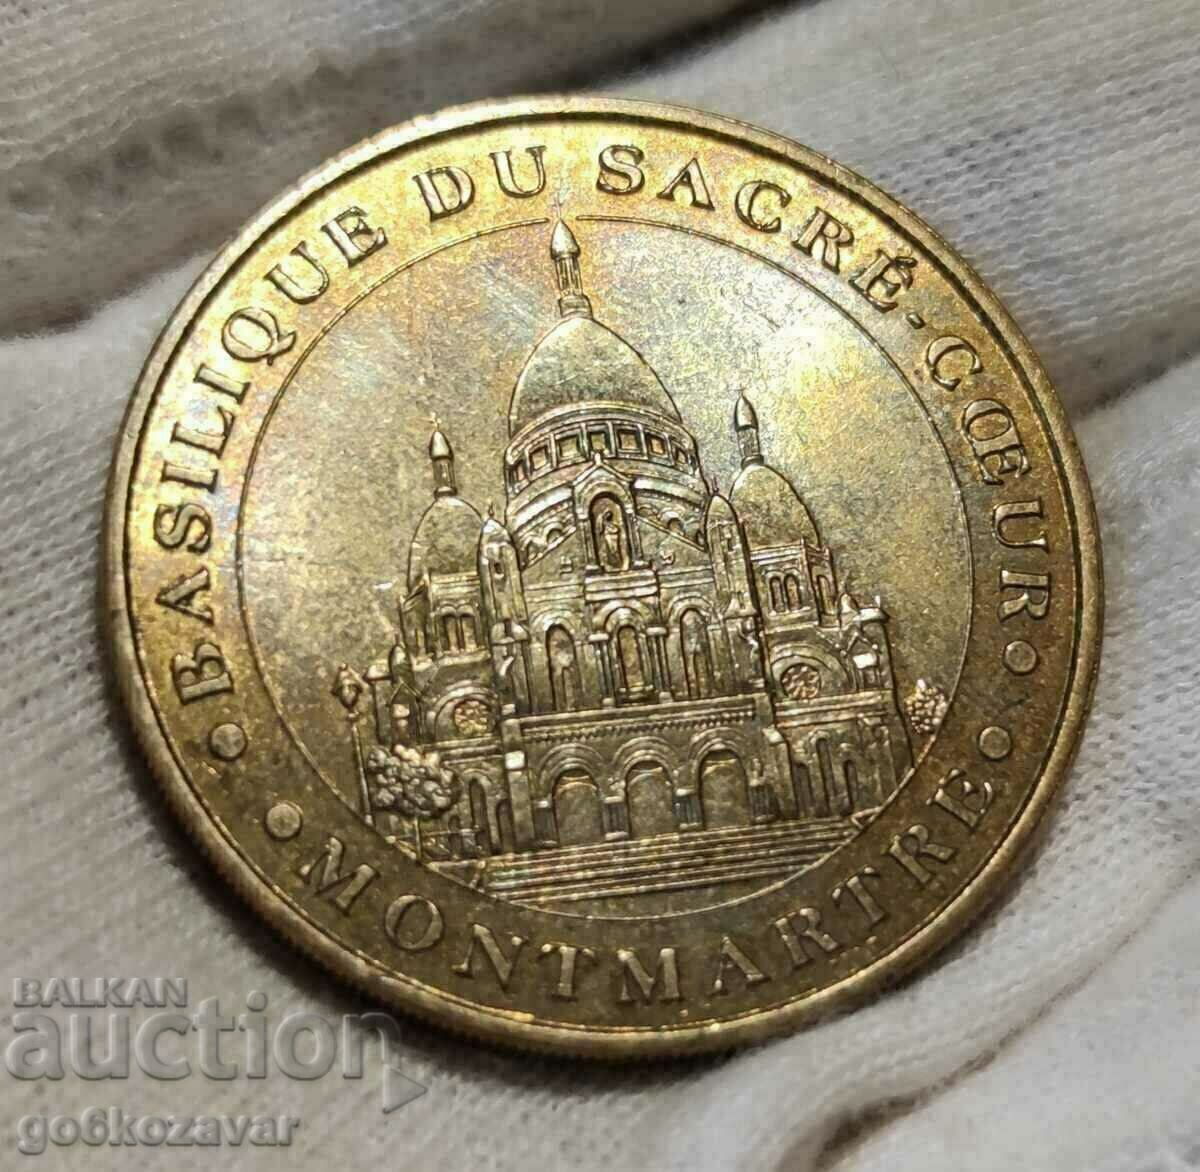 France Medal, Paris Basilica 2004